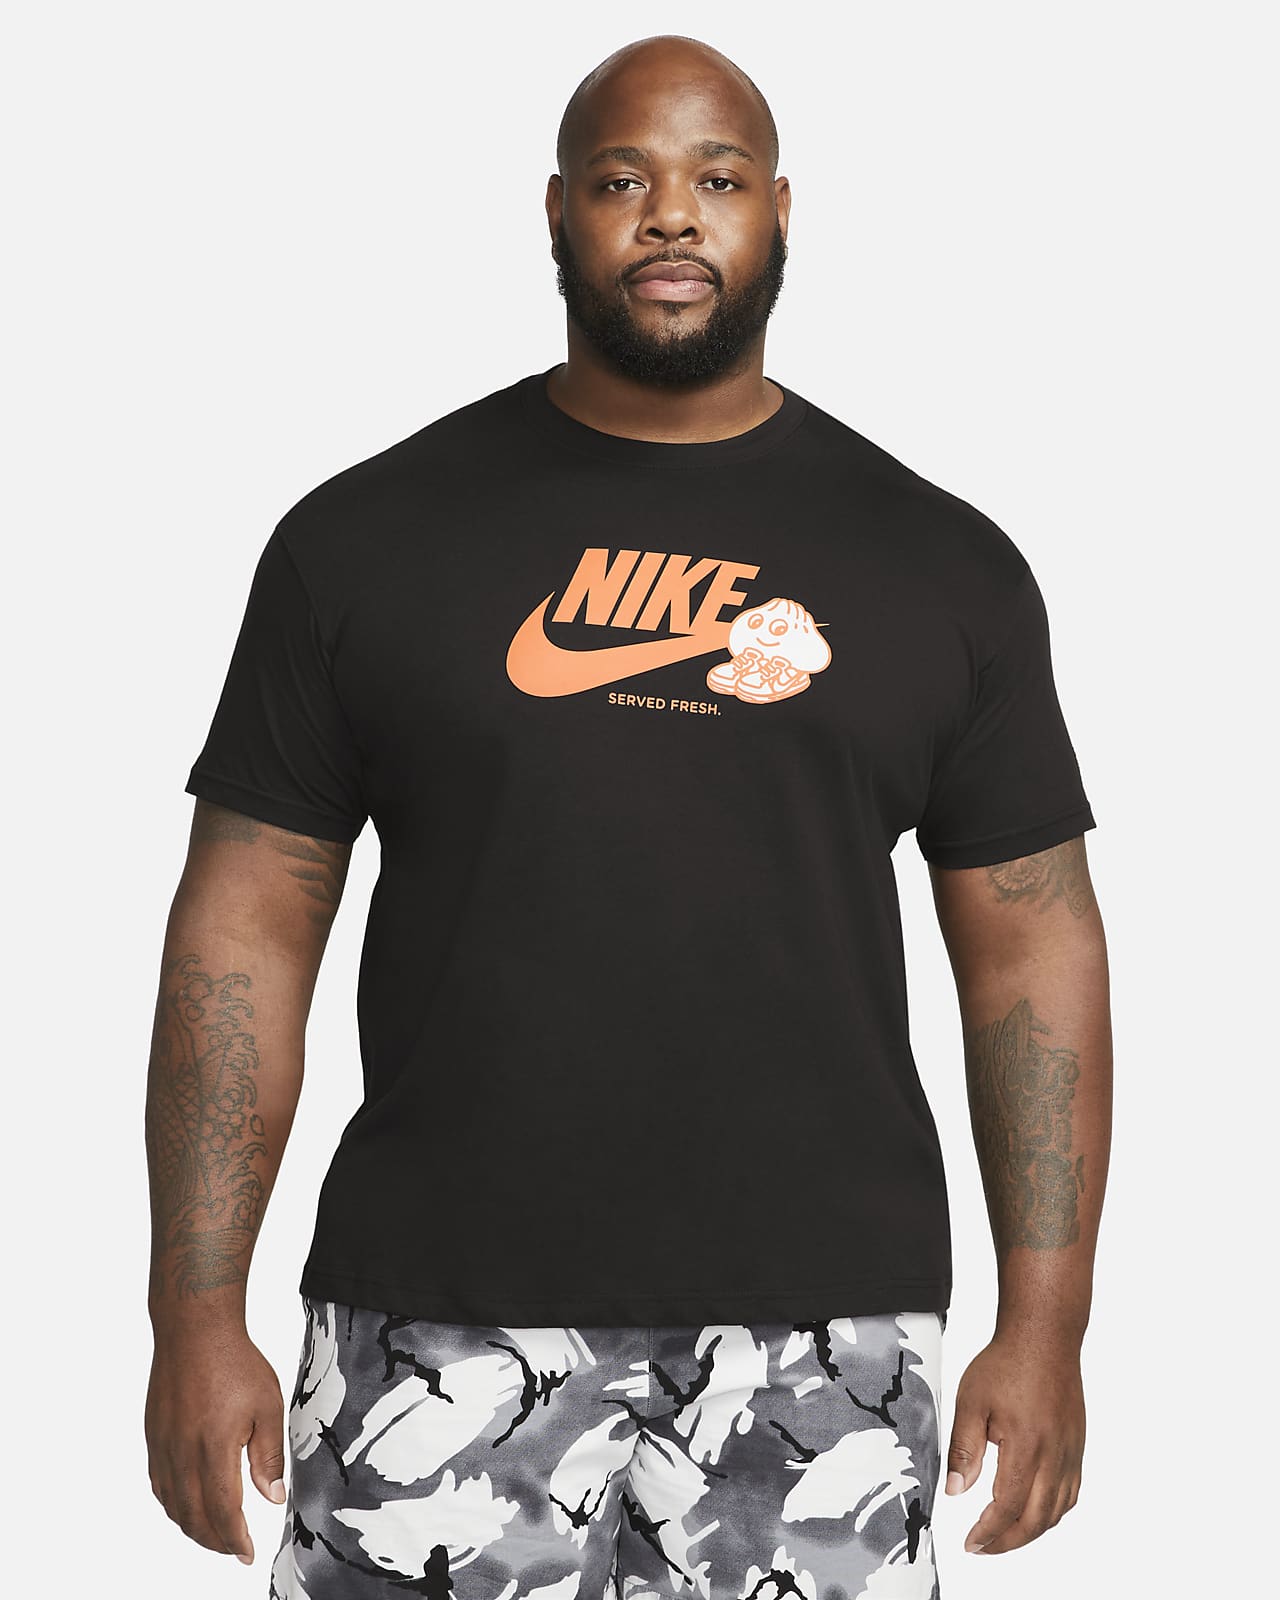 Nike Sportswear Air Max Men's T-Shirt. Nike ZA